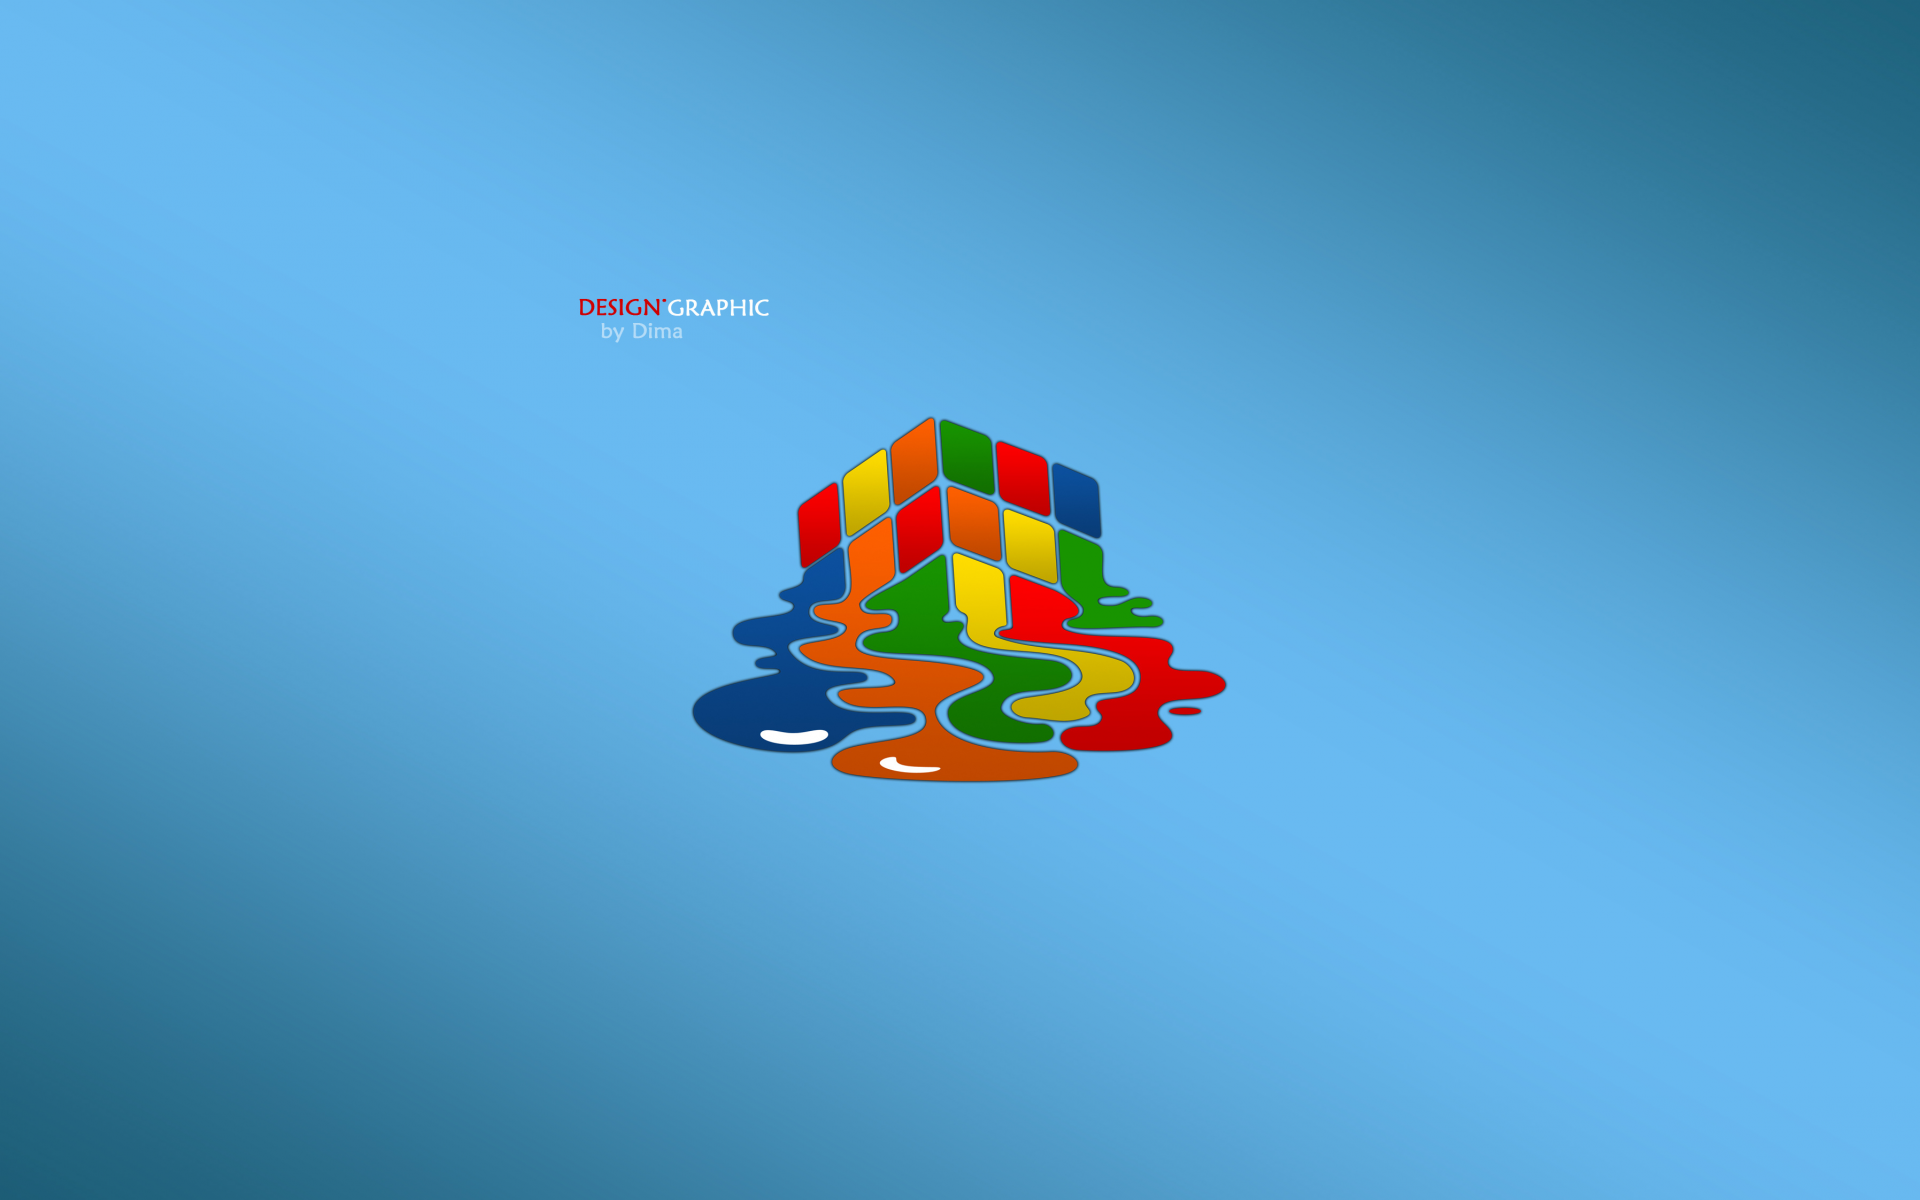 design graphic, лужа, синий фон, кубик рубика, кубик